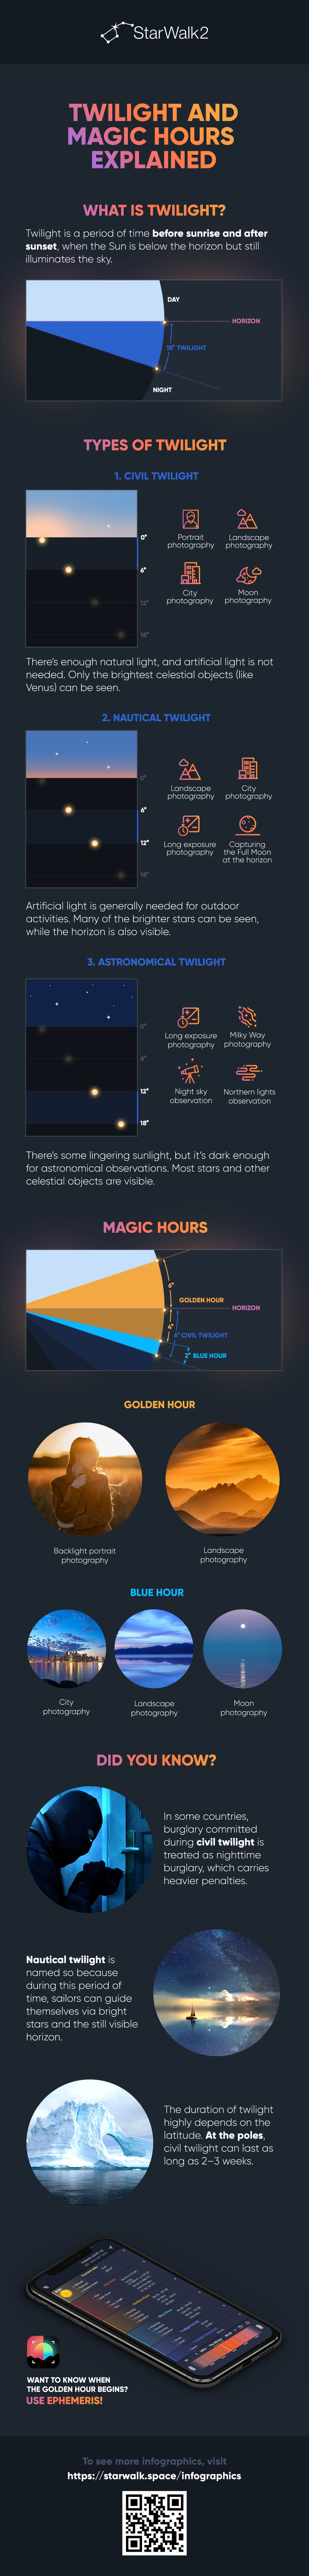 Twilight and Magic Hours Explained